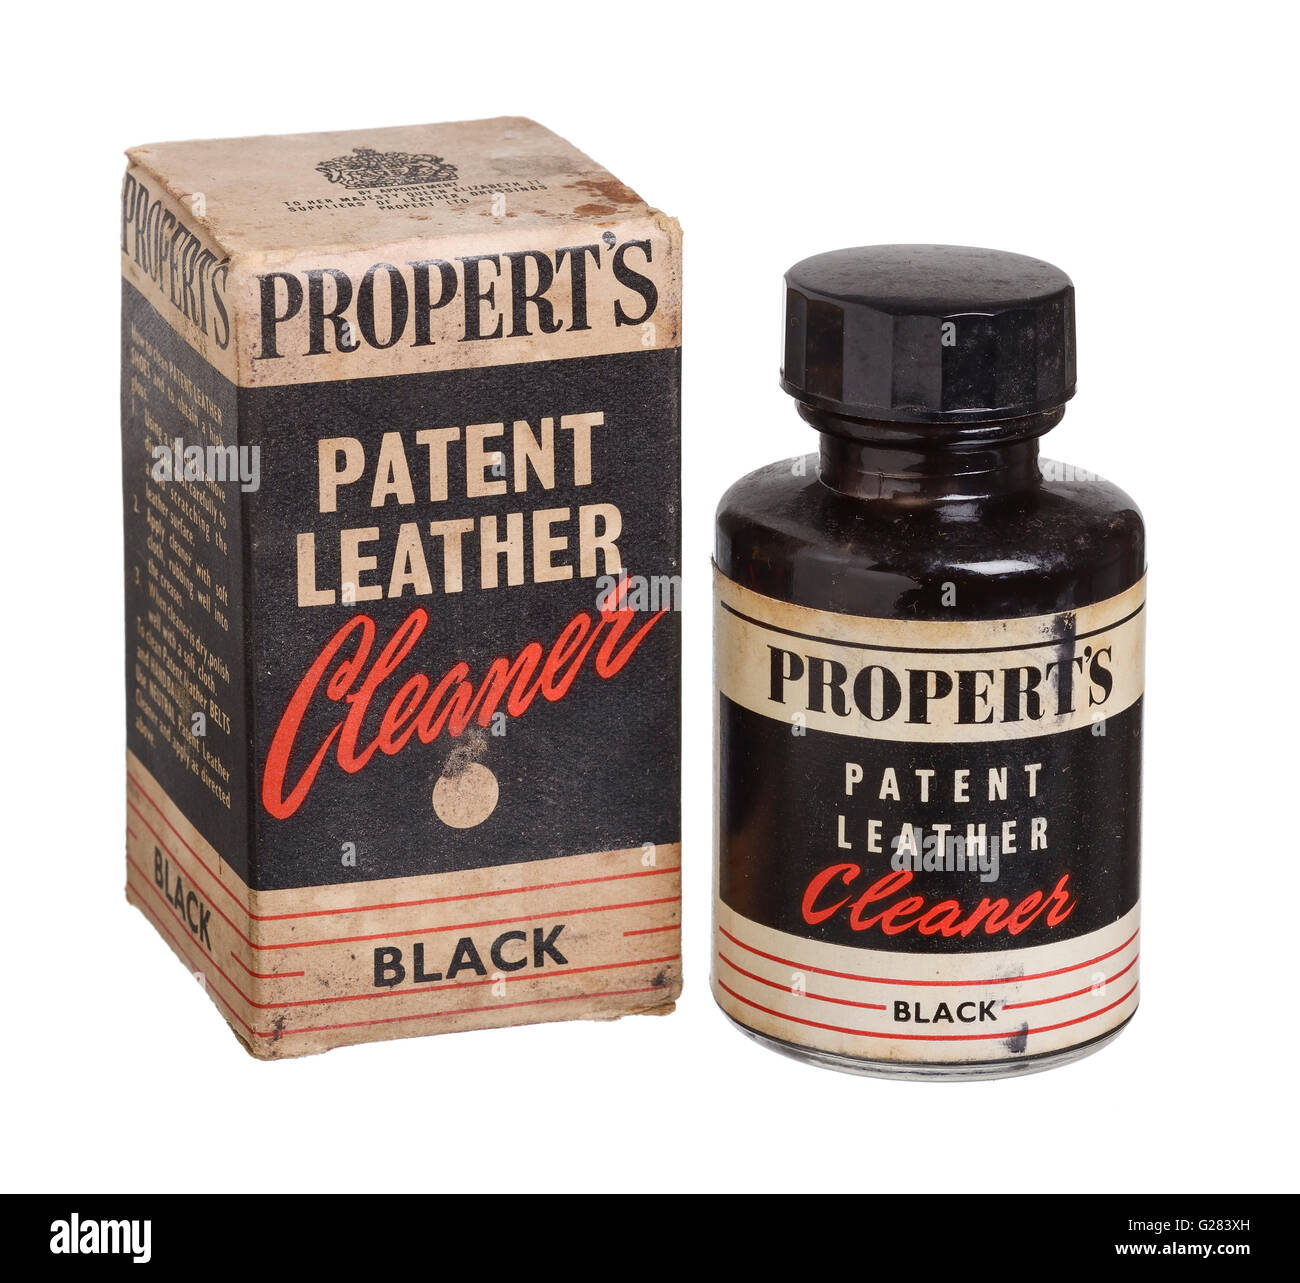 Old vintage bouteille et fort d'Proberts Patent Leather Cleaner Banque D'Images